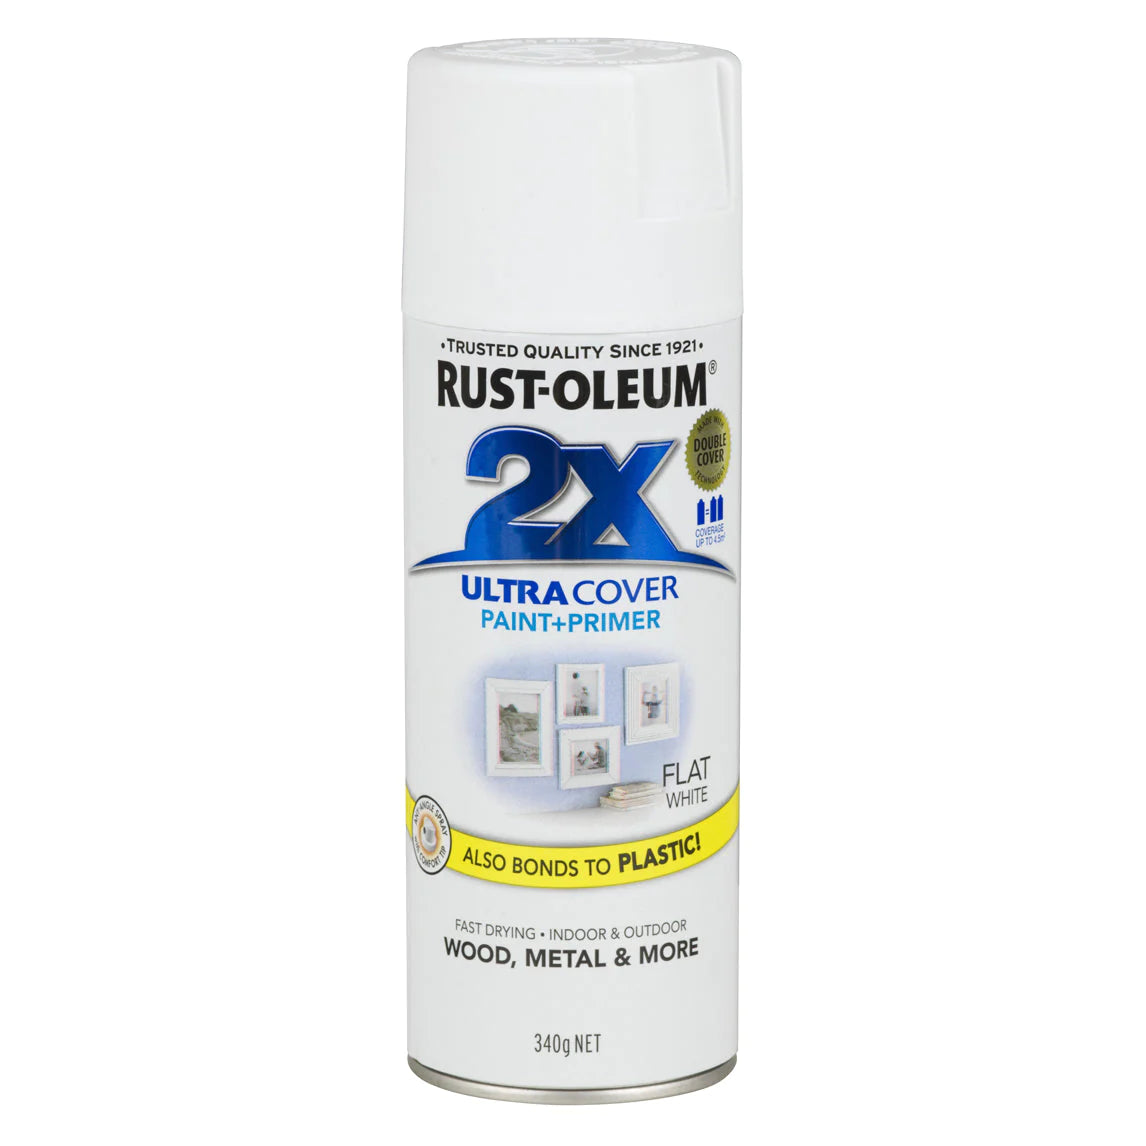 Rust-oleum 2X Flat White